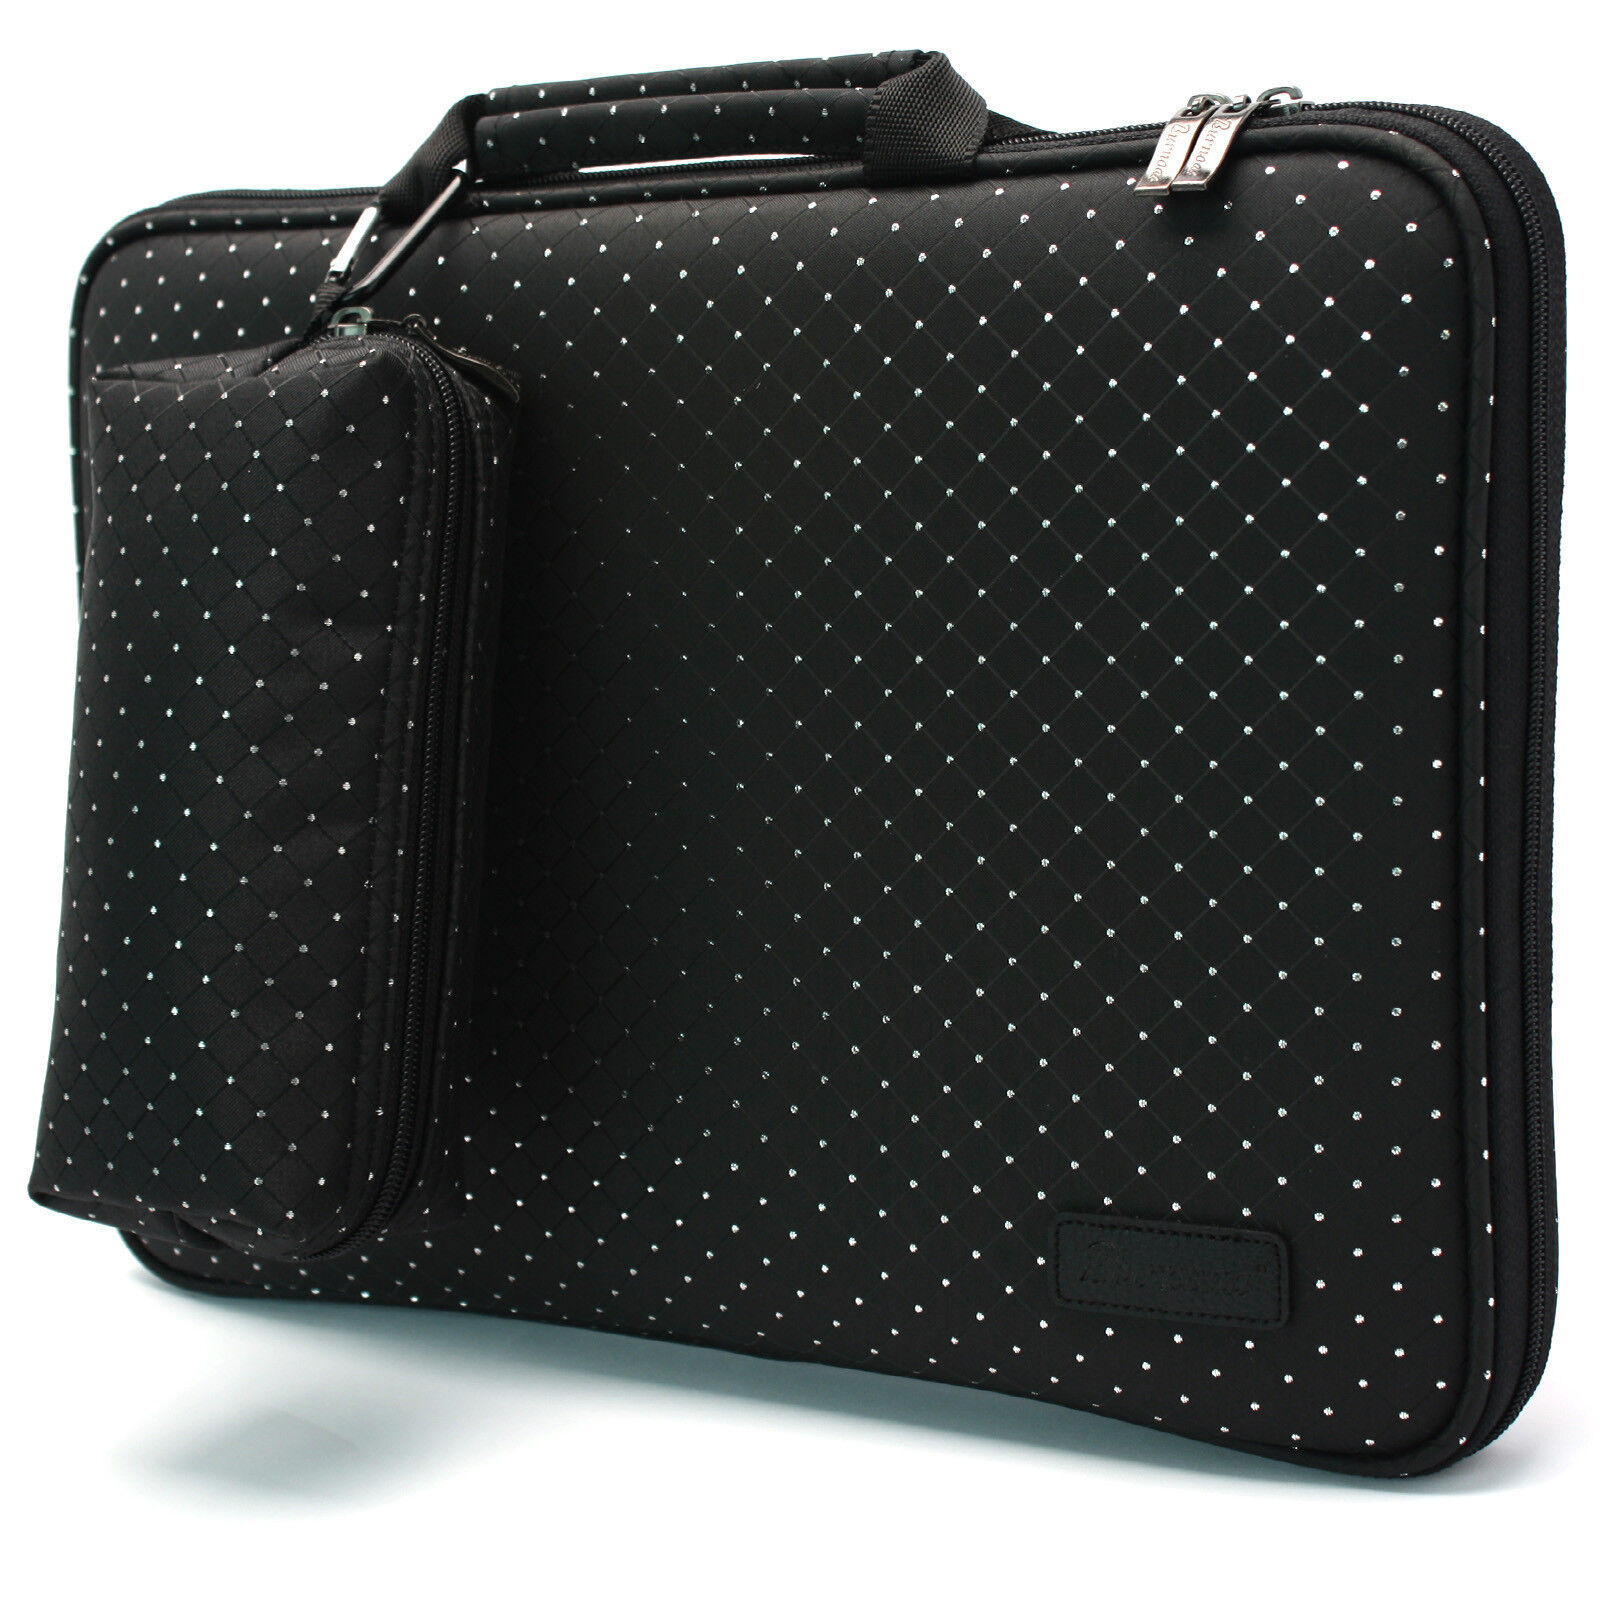 Dell Latitude ST 10 Tablet Keyboard Carry Case Sleeve Bag Memory foam CR i